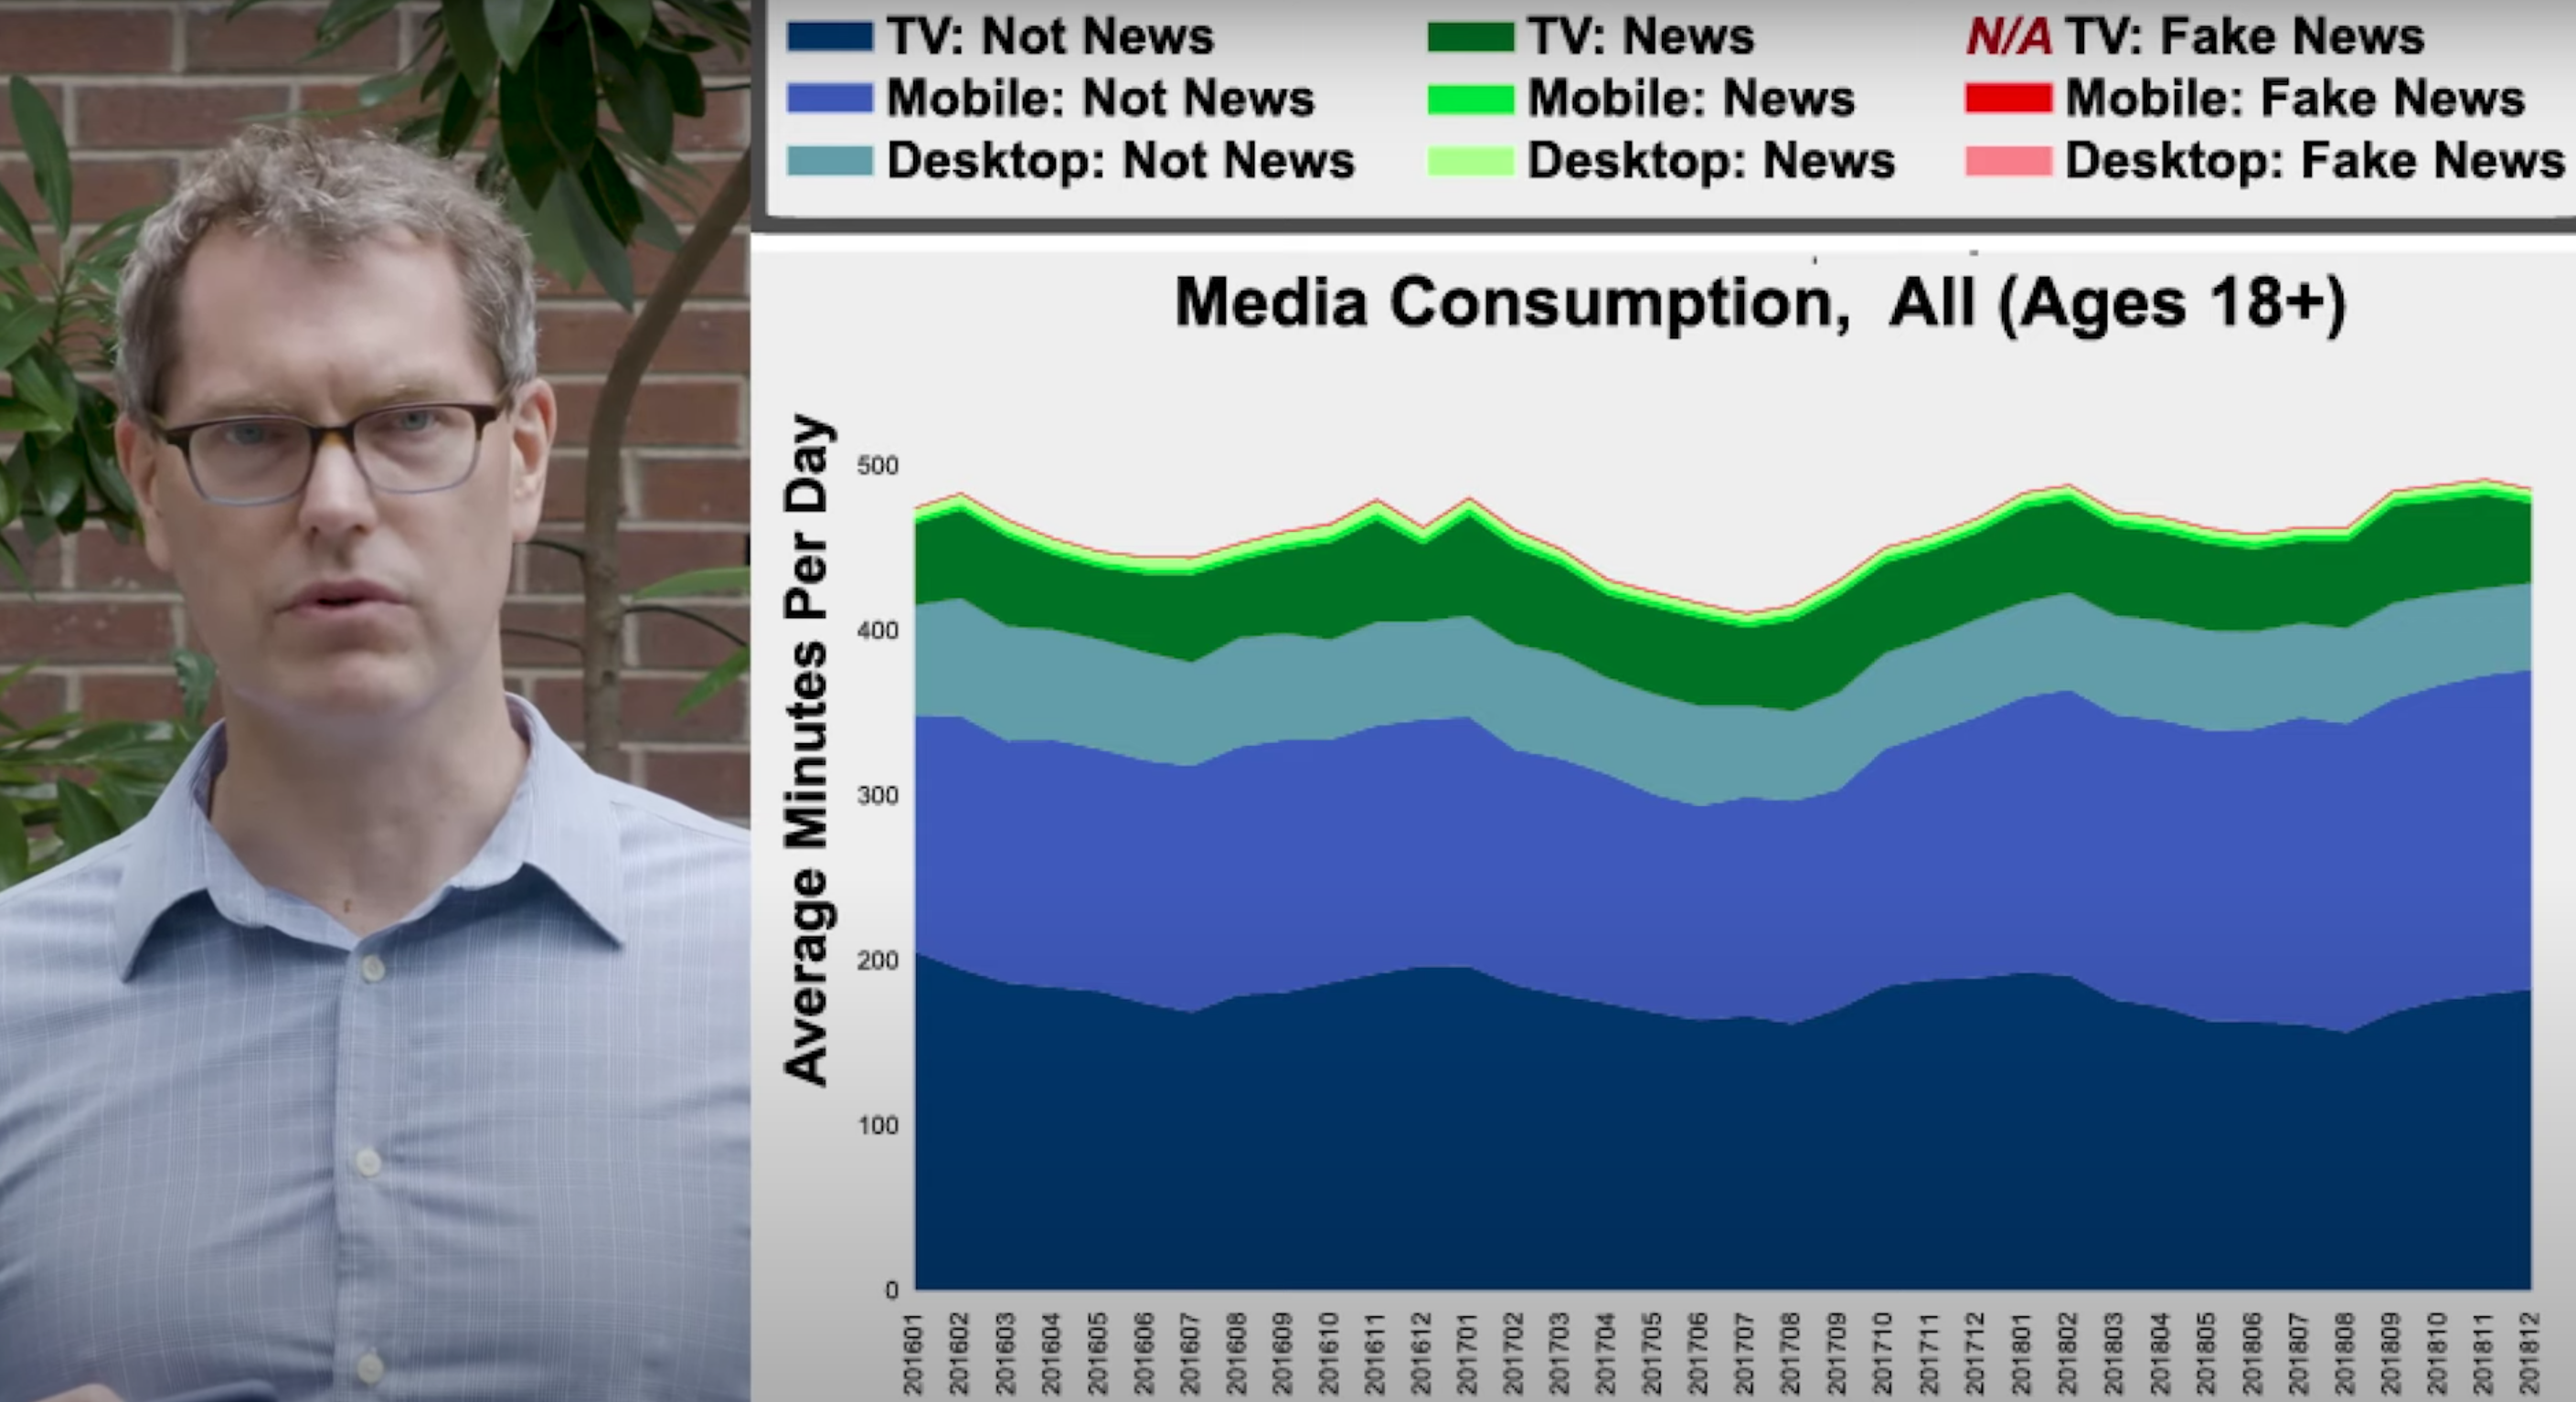 Duncan Watts and media consumption data